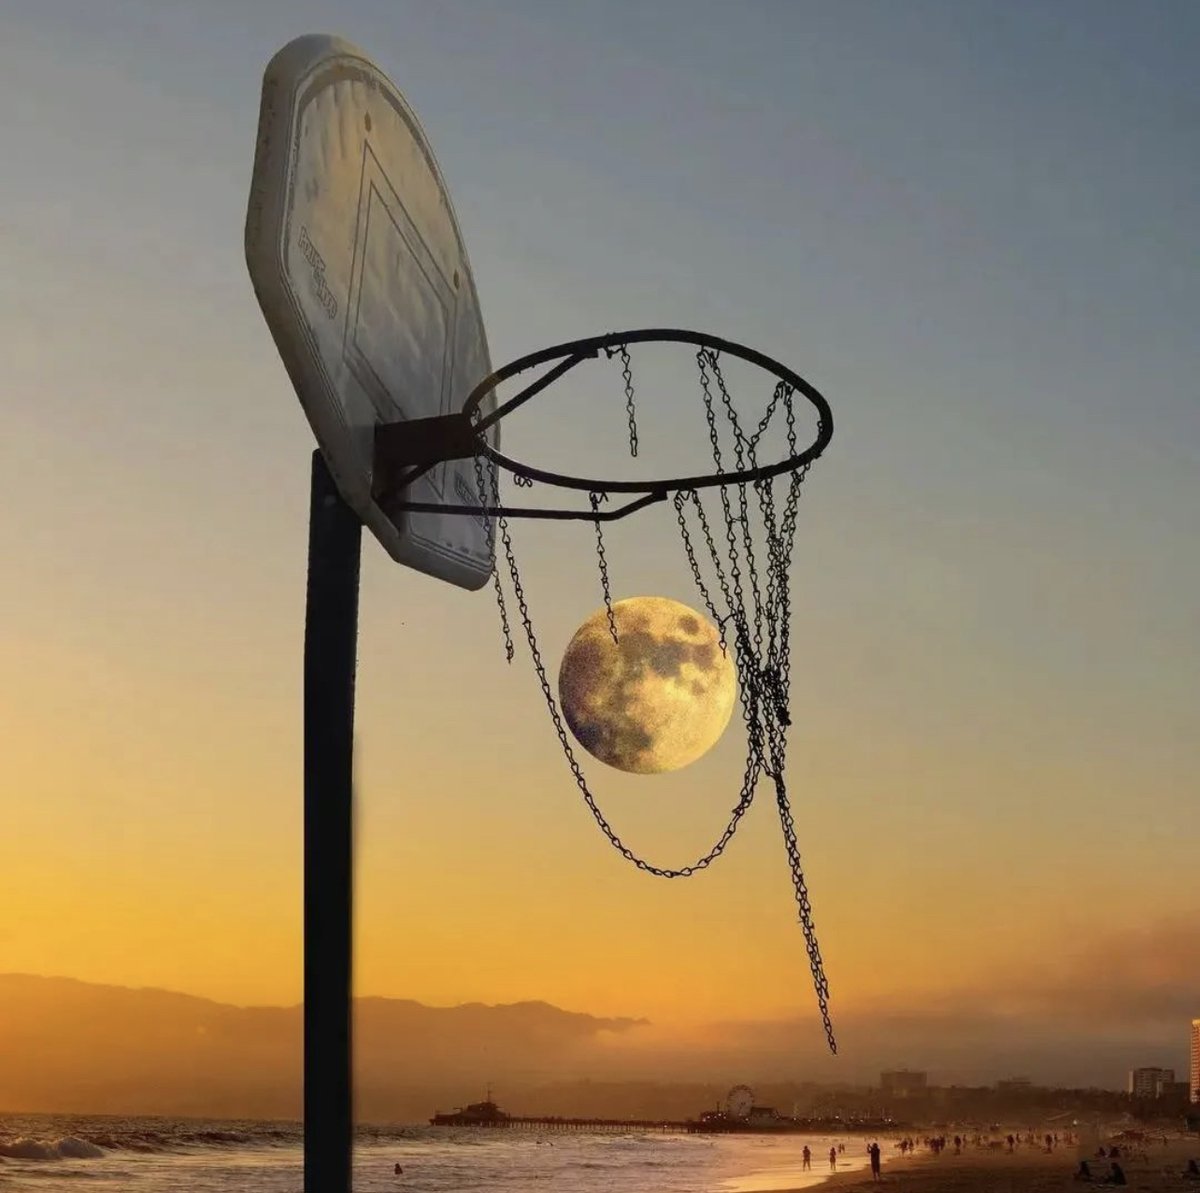 Moon as basketball.